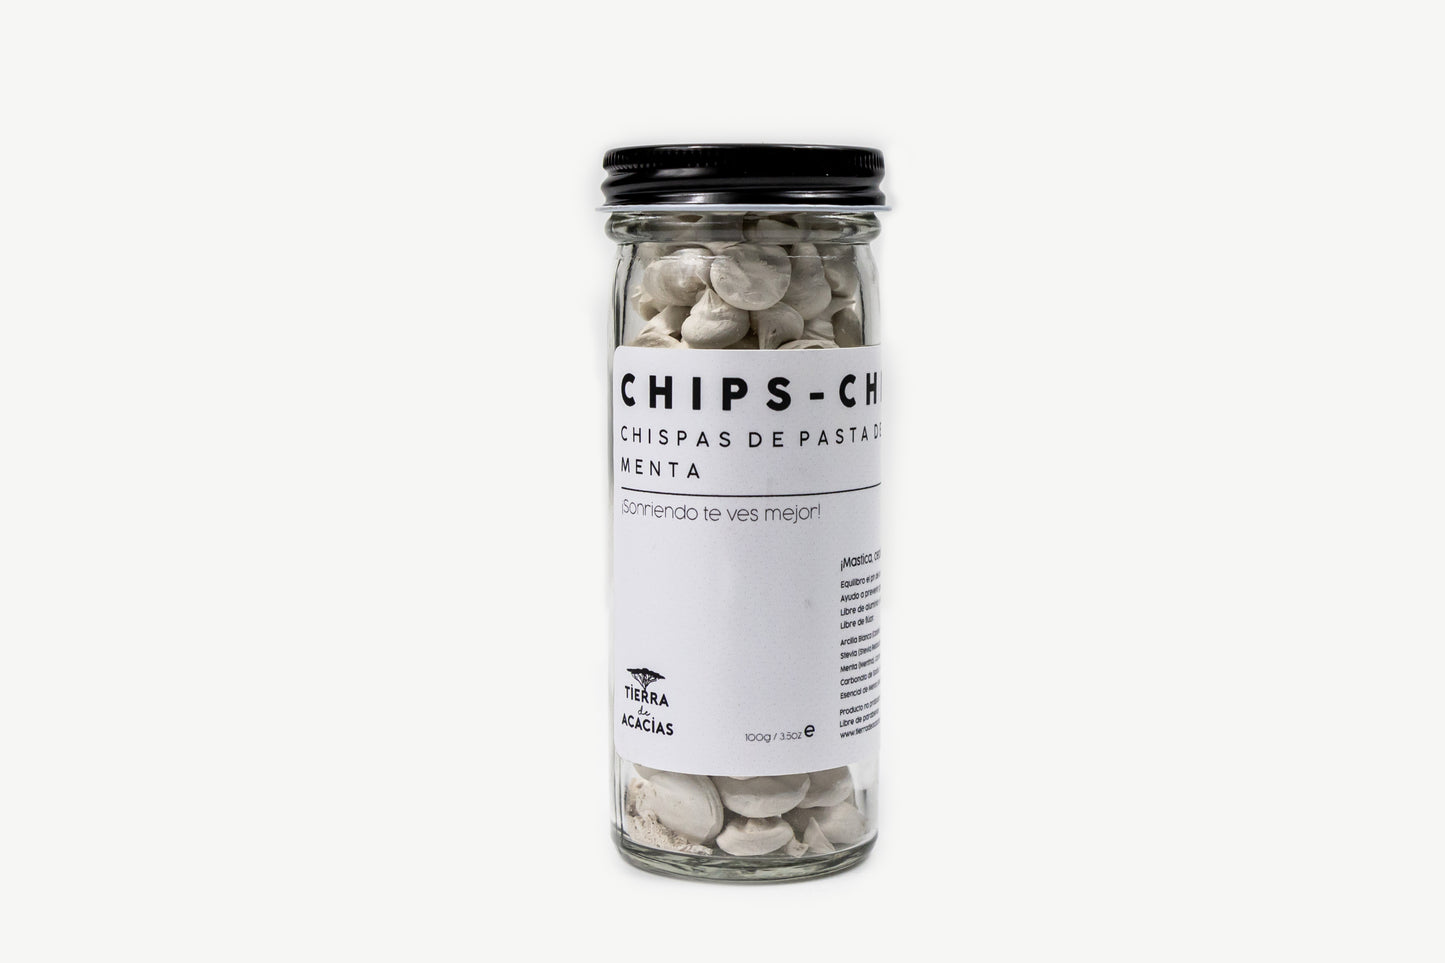 Chips-Chips / Pasta Dental en Chispas